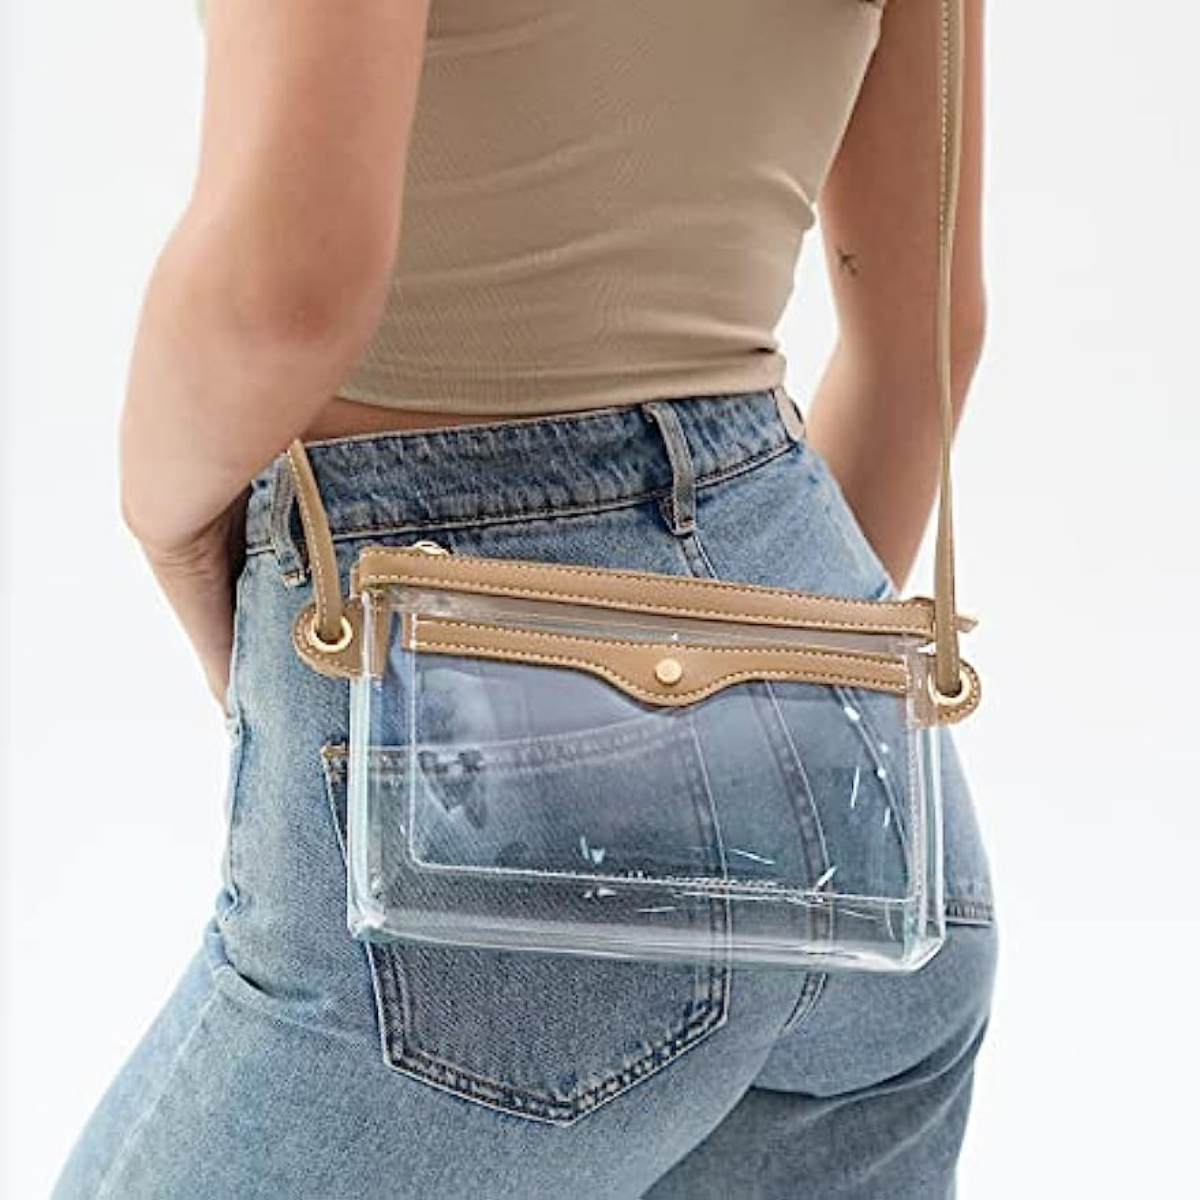 Women's Clear PVC Cross Body Bag Pocket Shoulder Bag with Vegan Leather Trim Transparent Zipper Purse Stadium Approved